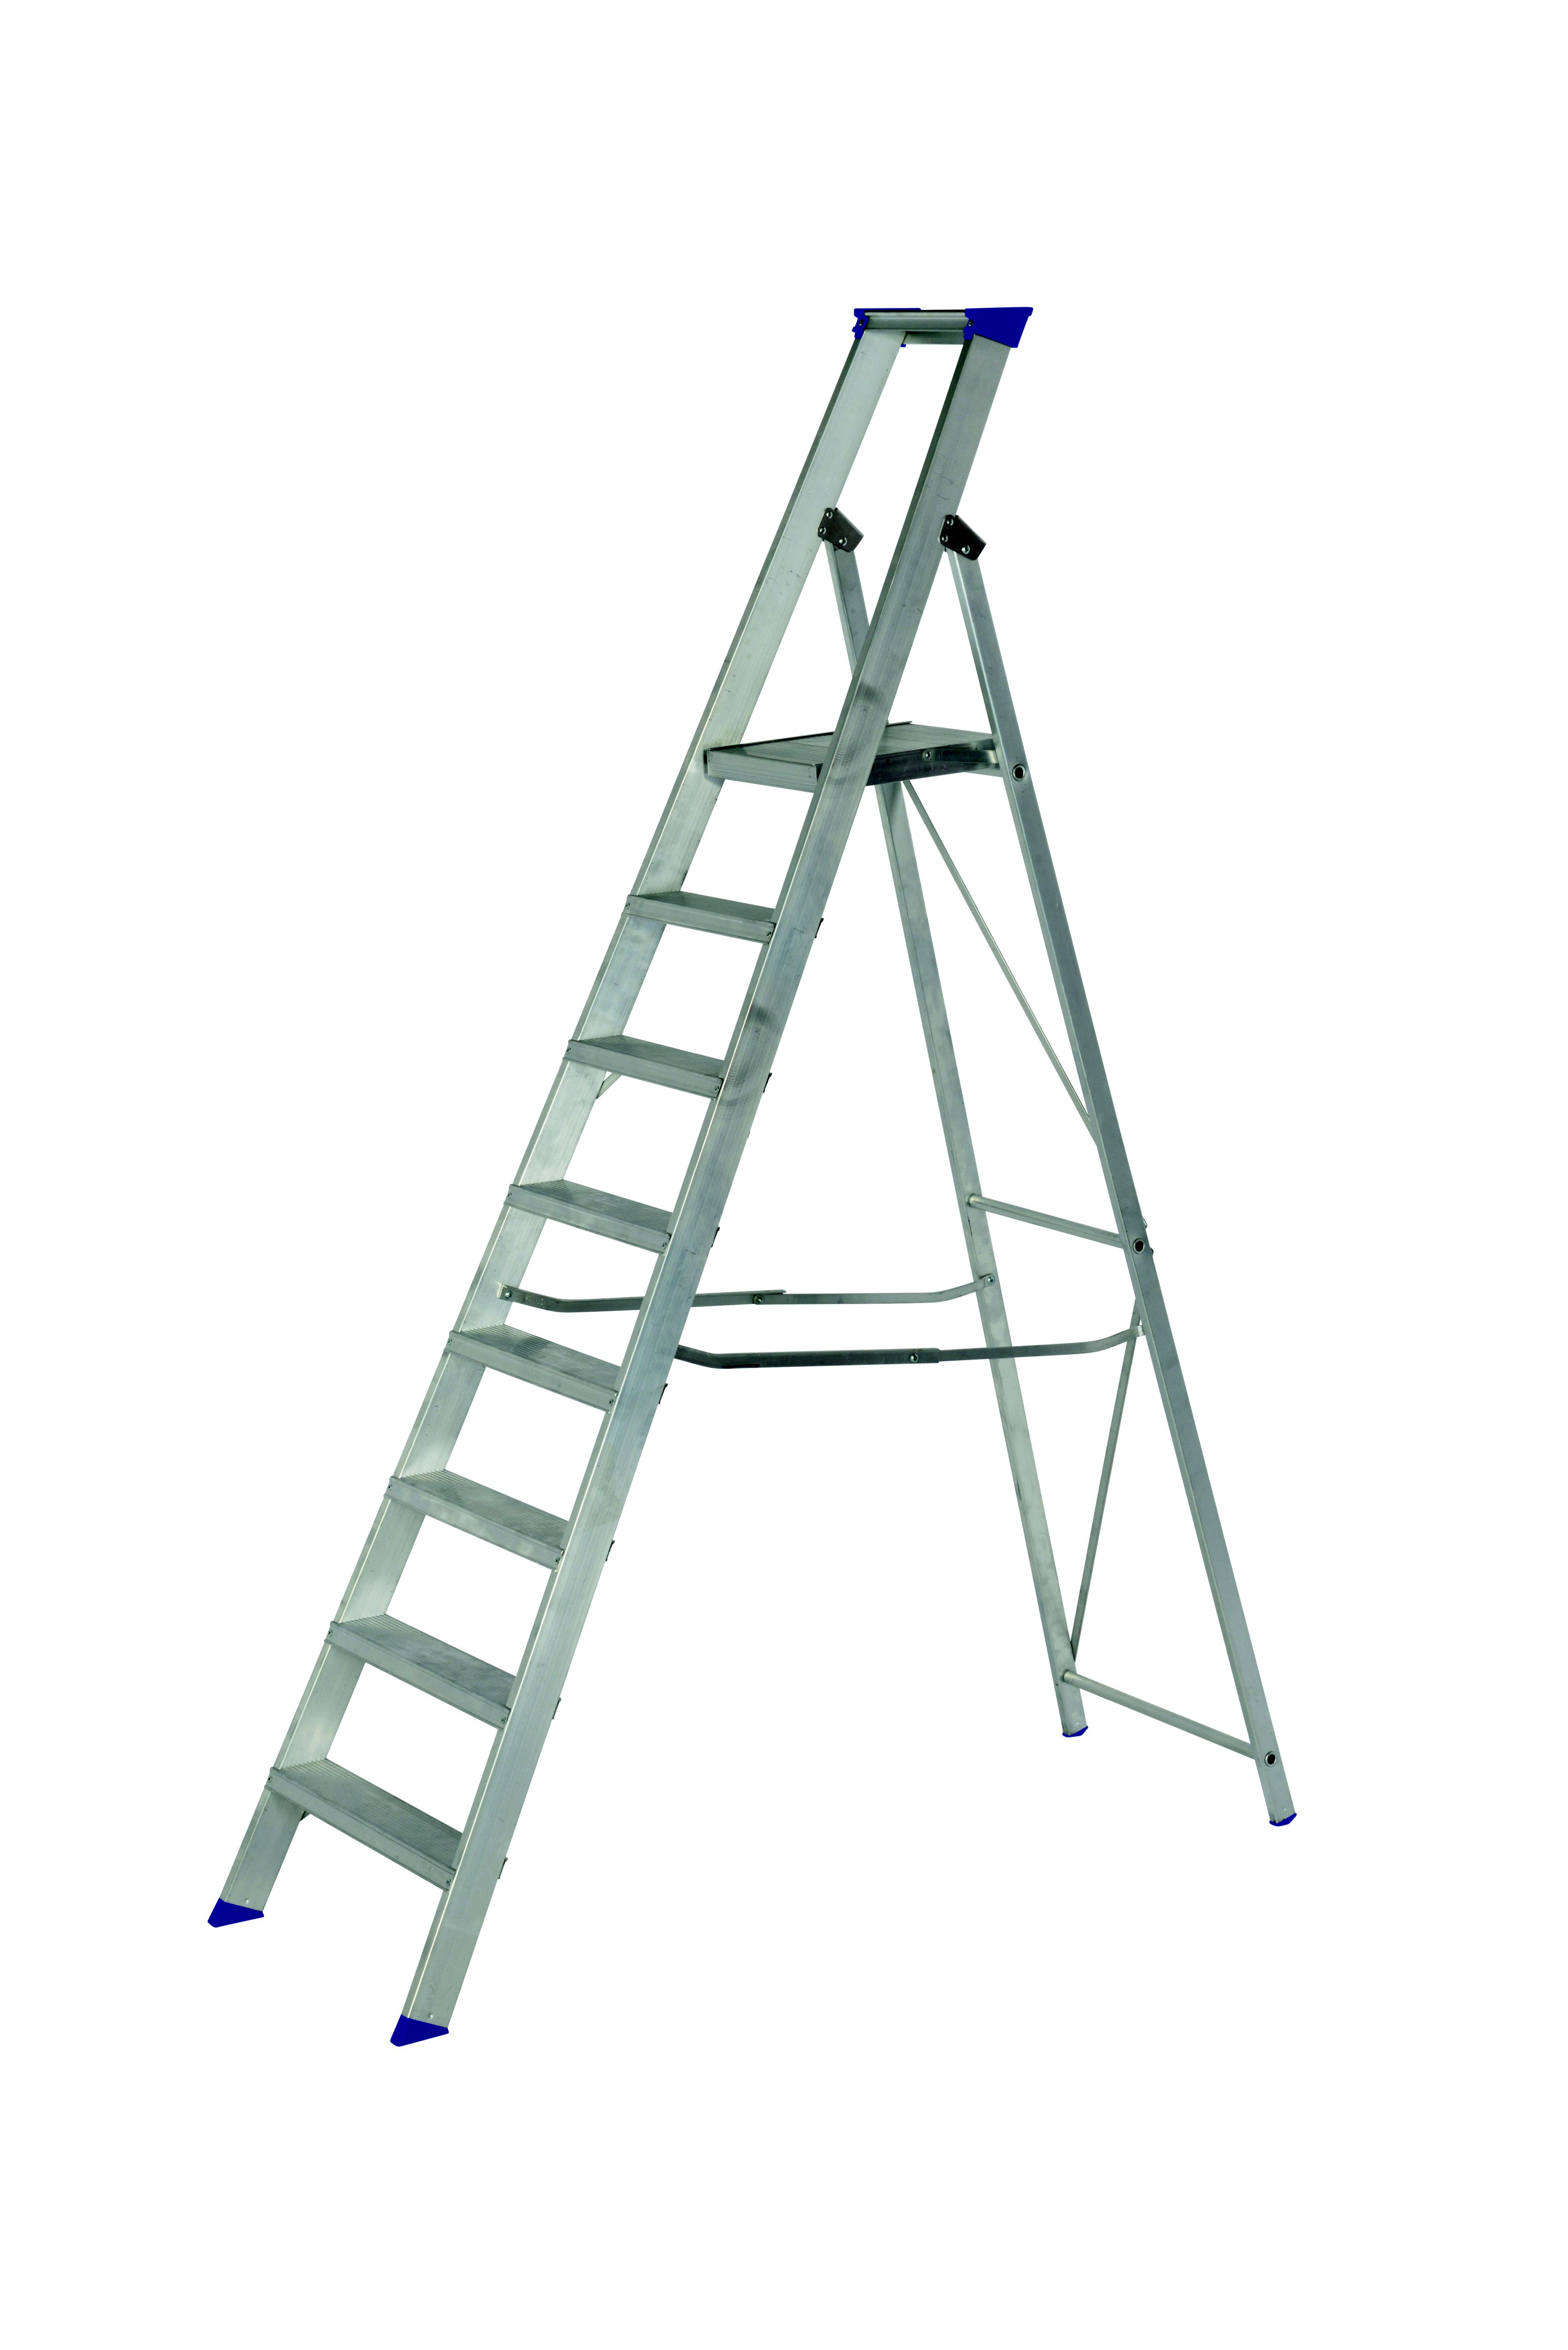 Werner 7 tread Aluminium Platform step Ladder (H)2.32m